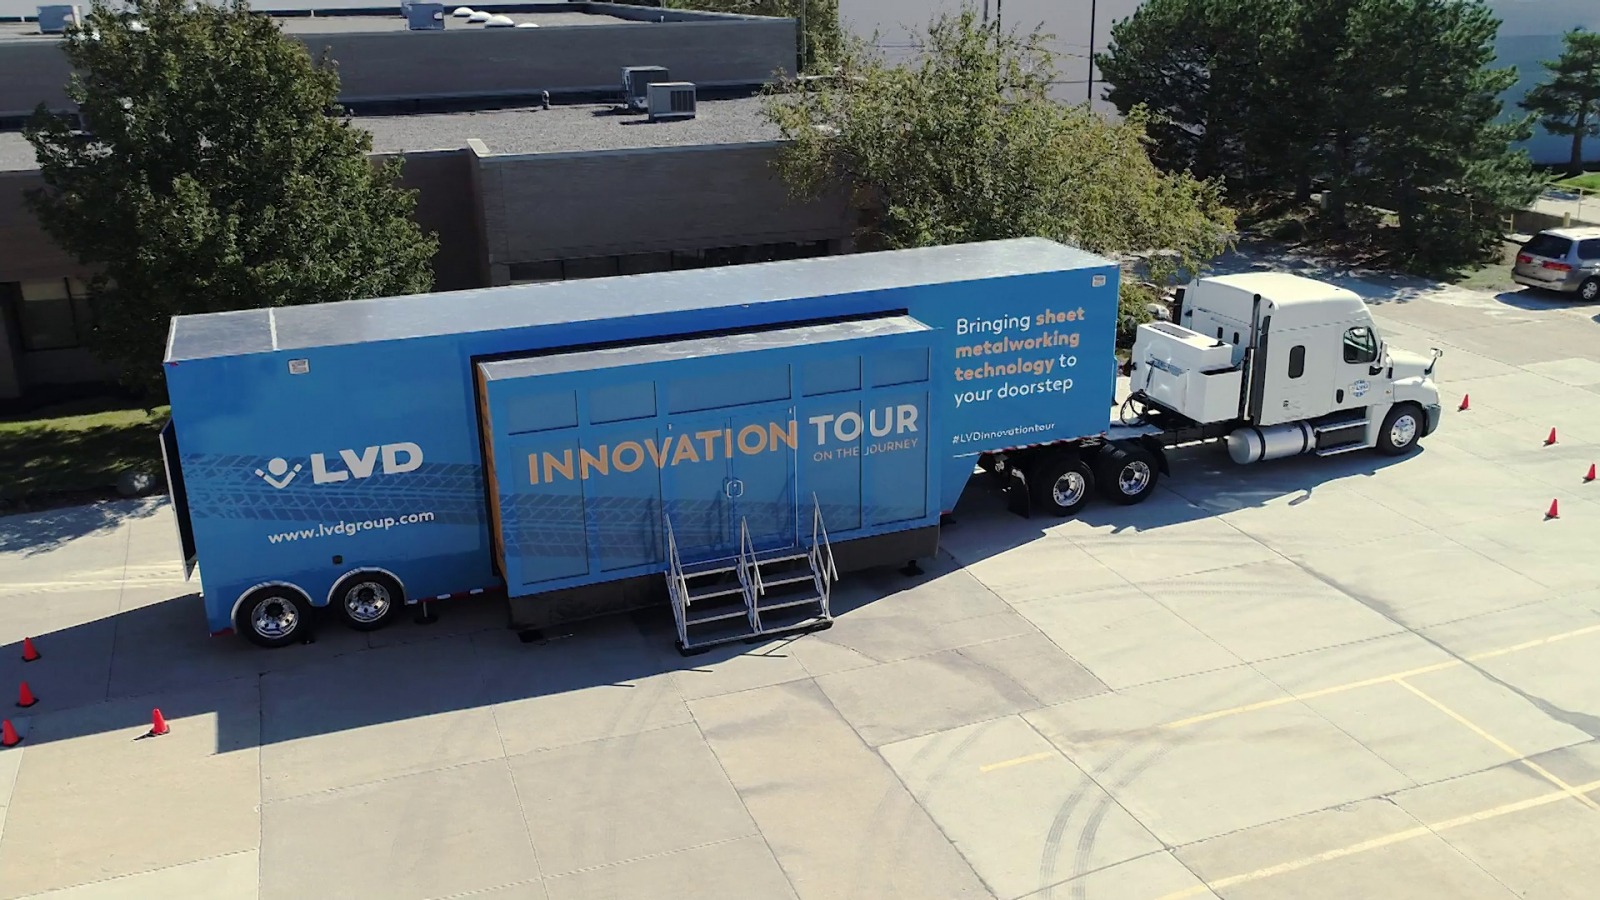 LVD Innovation Tour